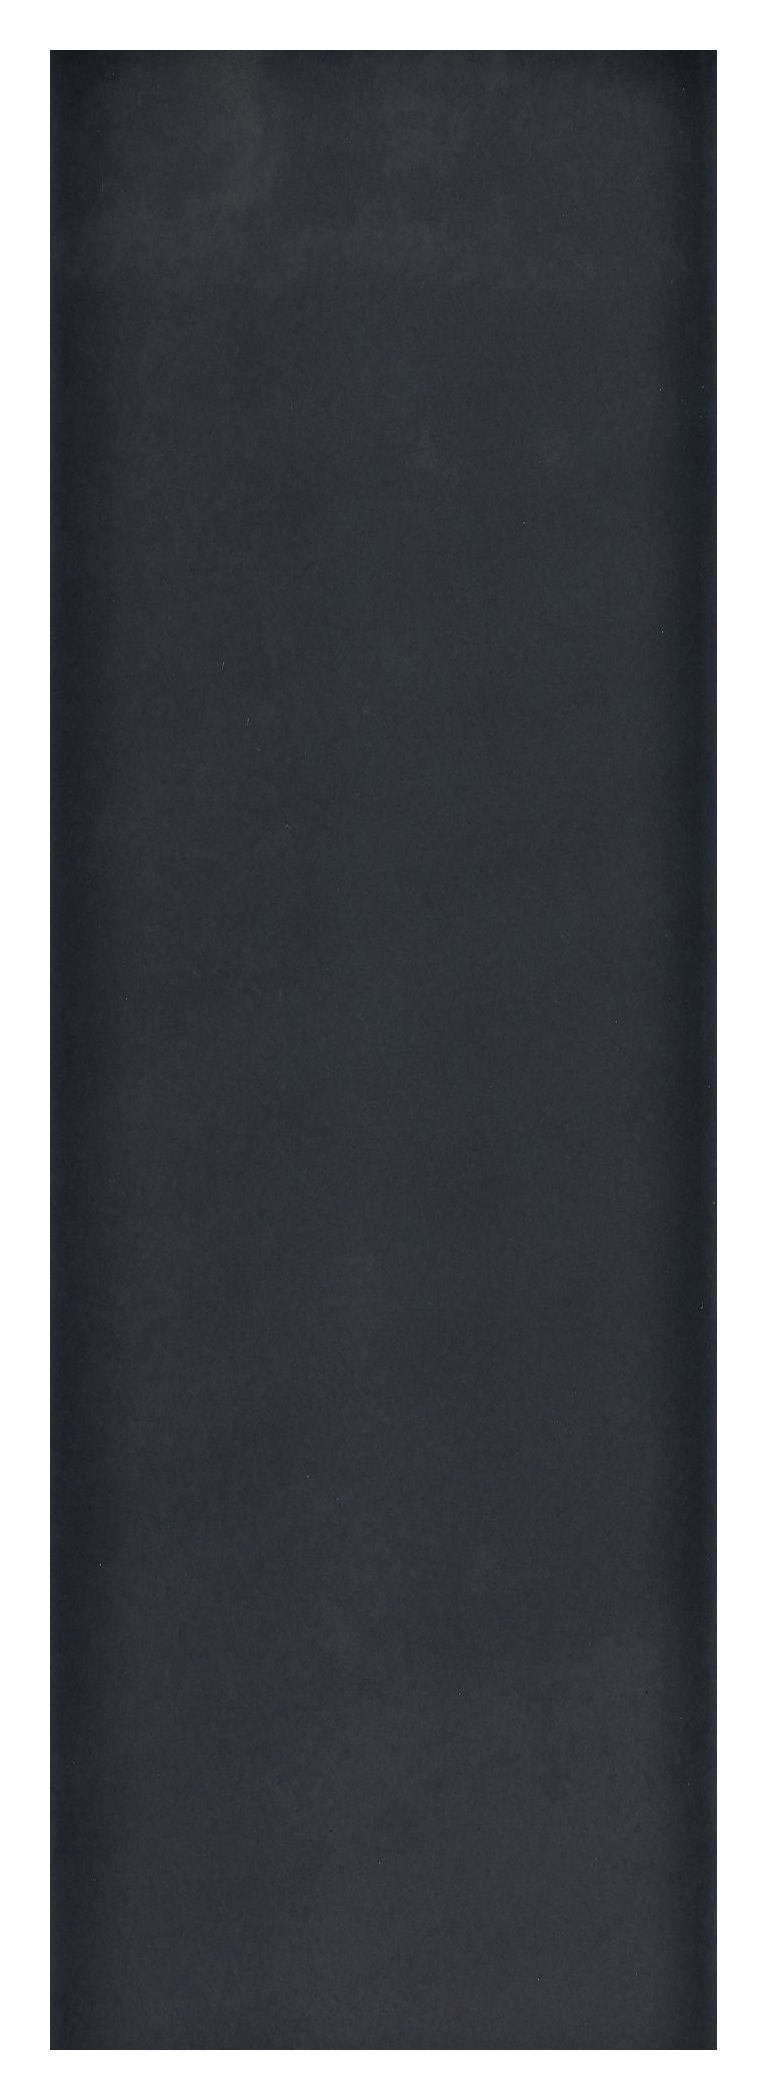 Image of Wickes Soho Carbon Black Ceramic Wall Tile - 300 x 100mm - Sample